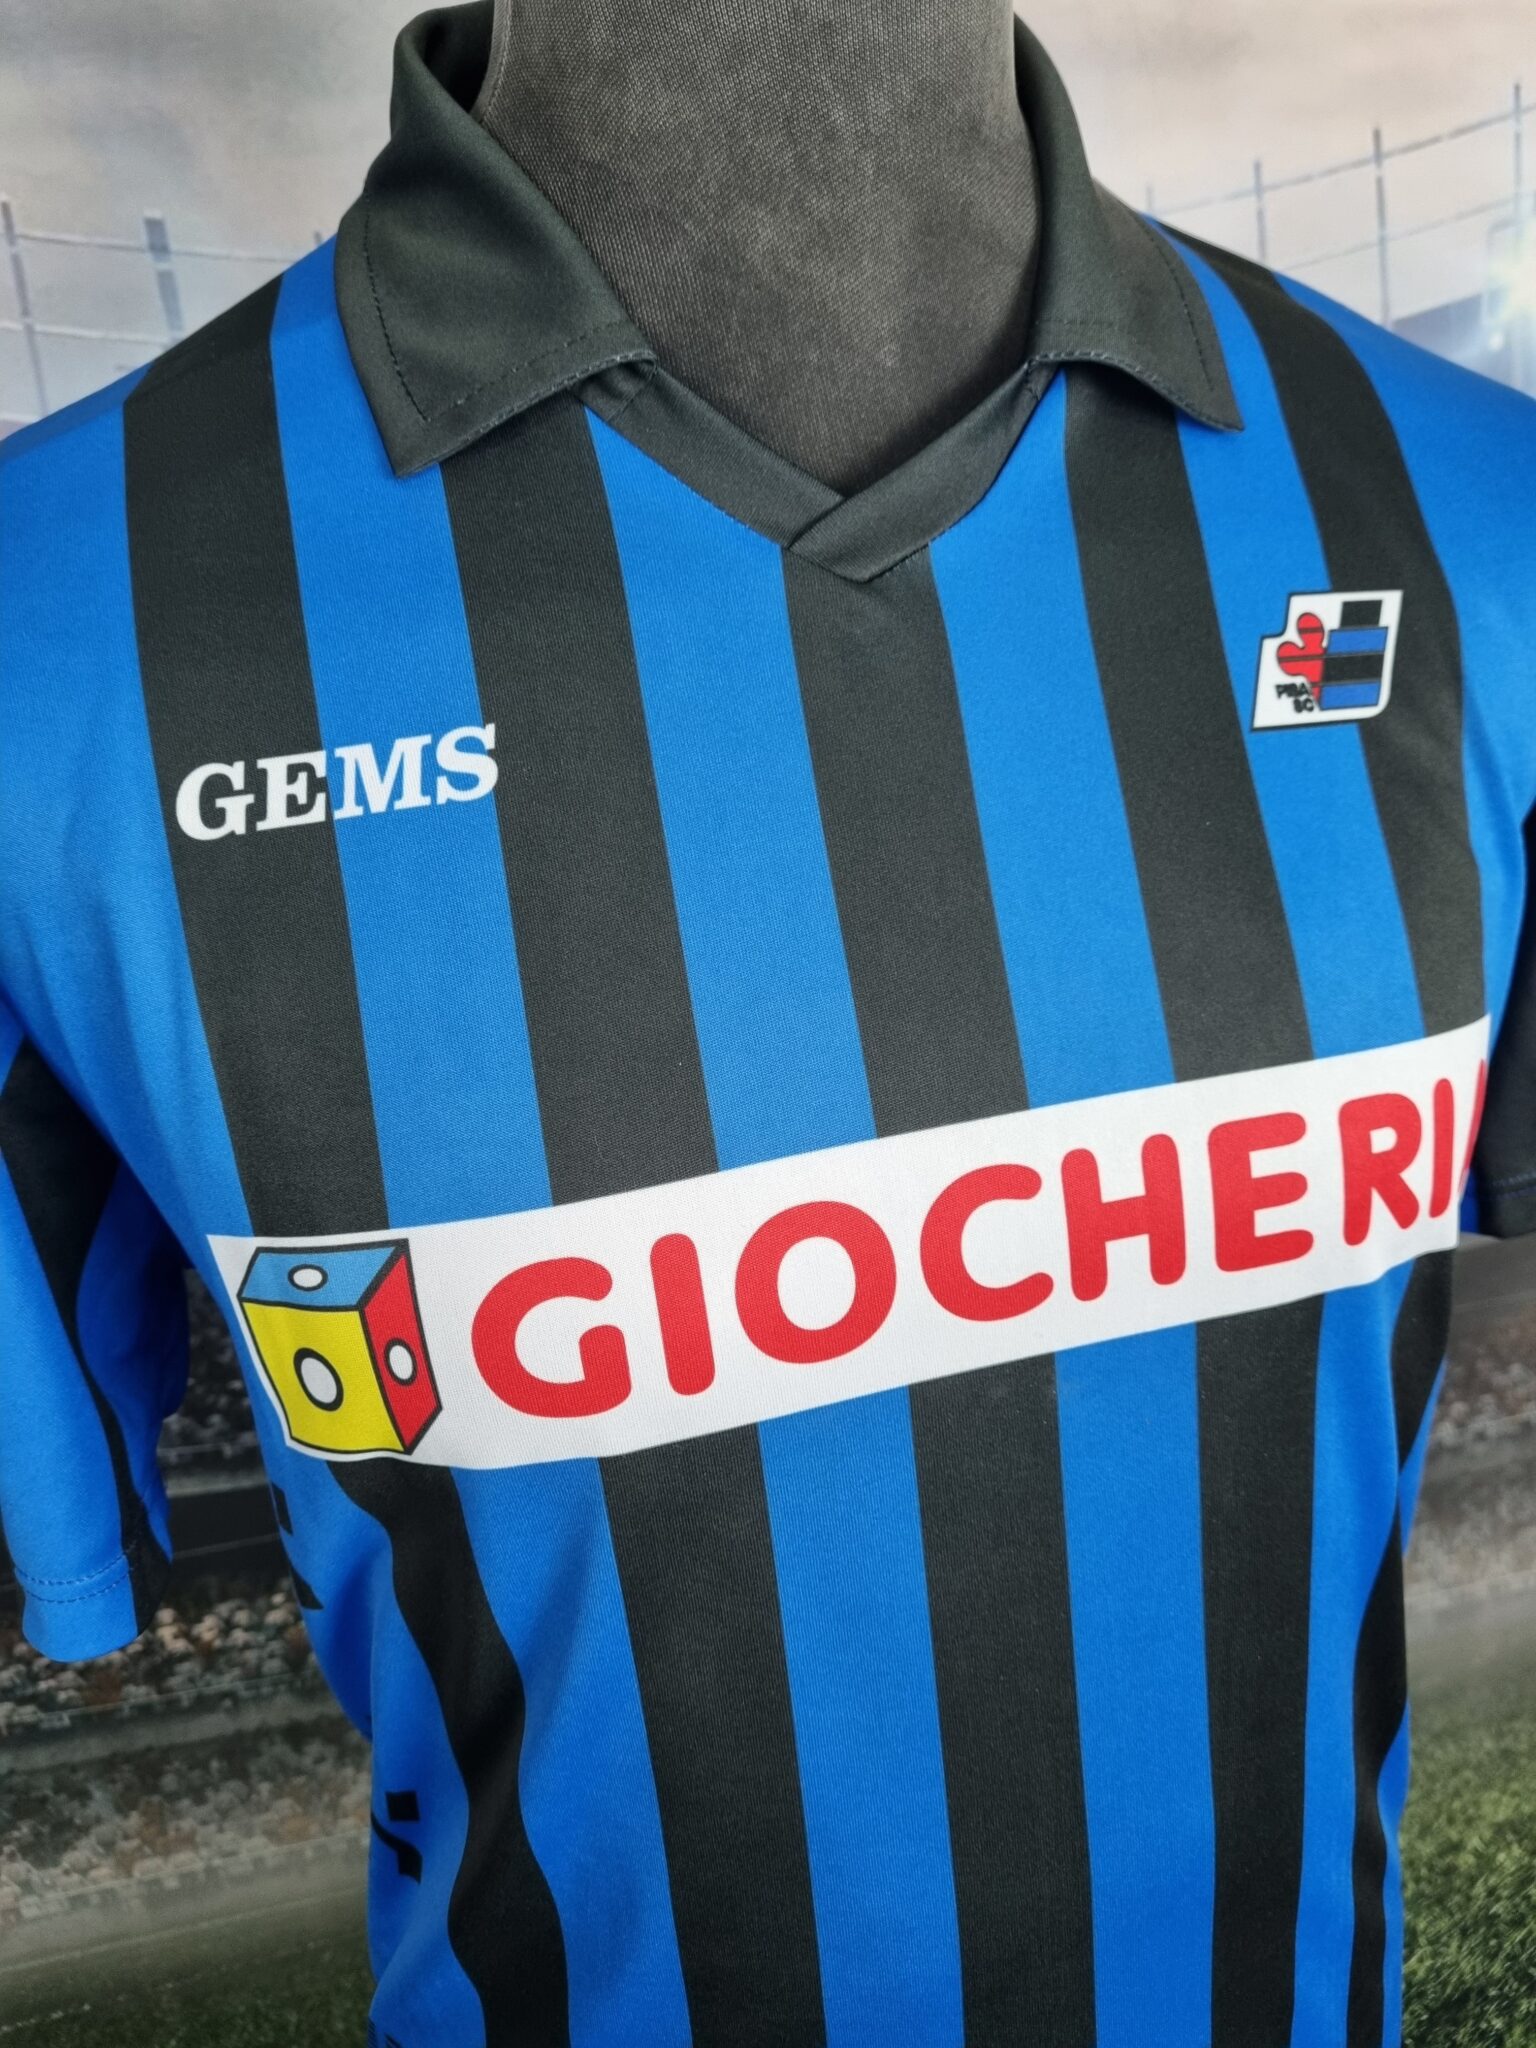 SC Pisa 1909 Home Maglia Calcio 1990/1991 Vintage Jersey Retro Shirt Italy - Sport Club Memories